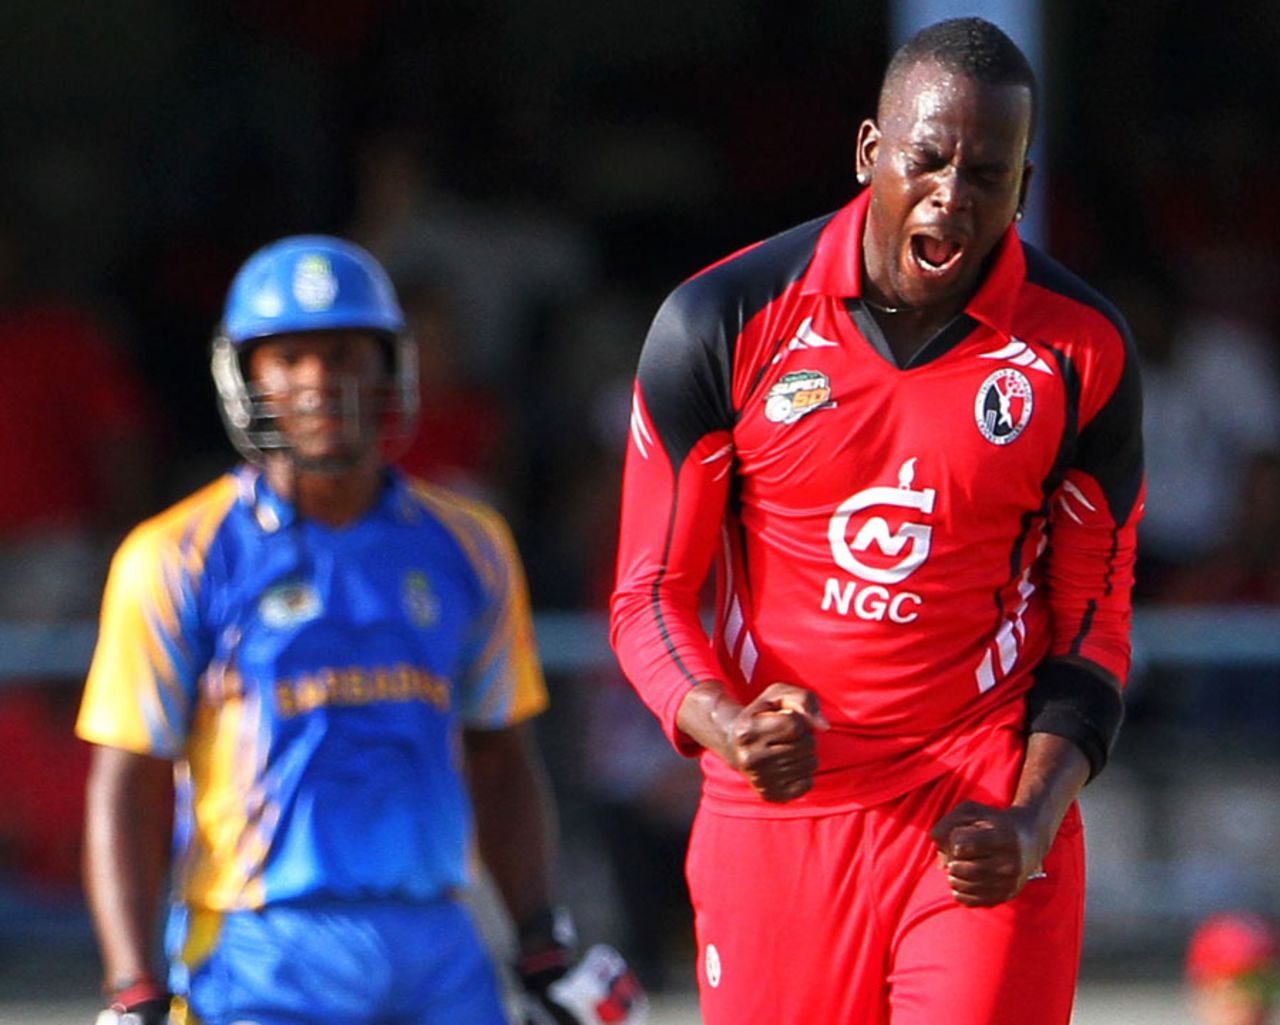 Kevon Cooper exults after taking a wicket, Trinidad & Tobago v Barbados, Nagico Super50, final, Port-of-Spain, February 15, 2014